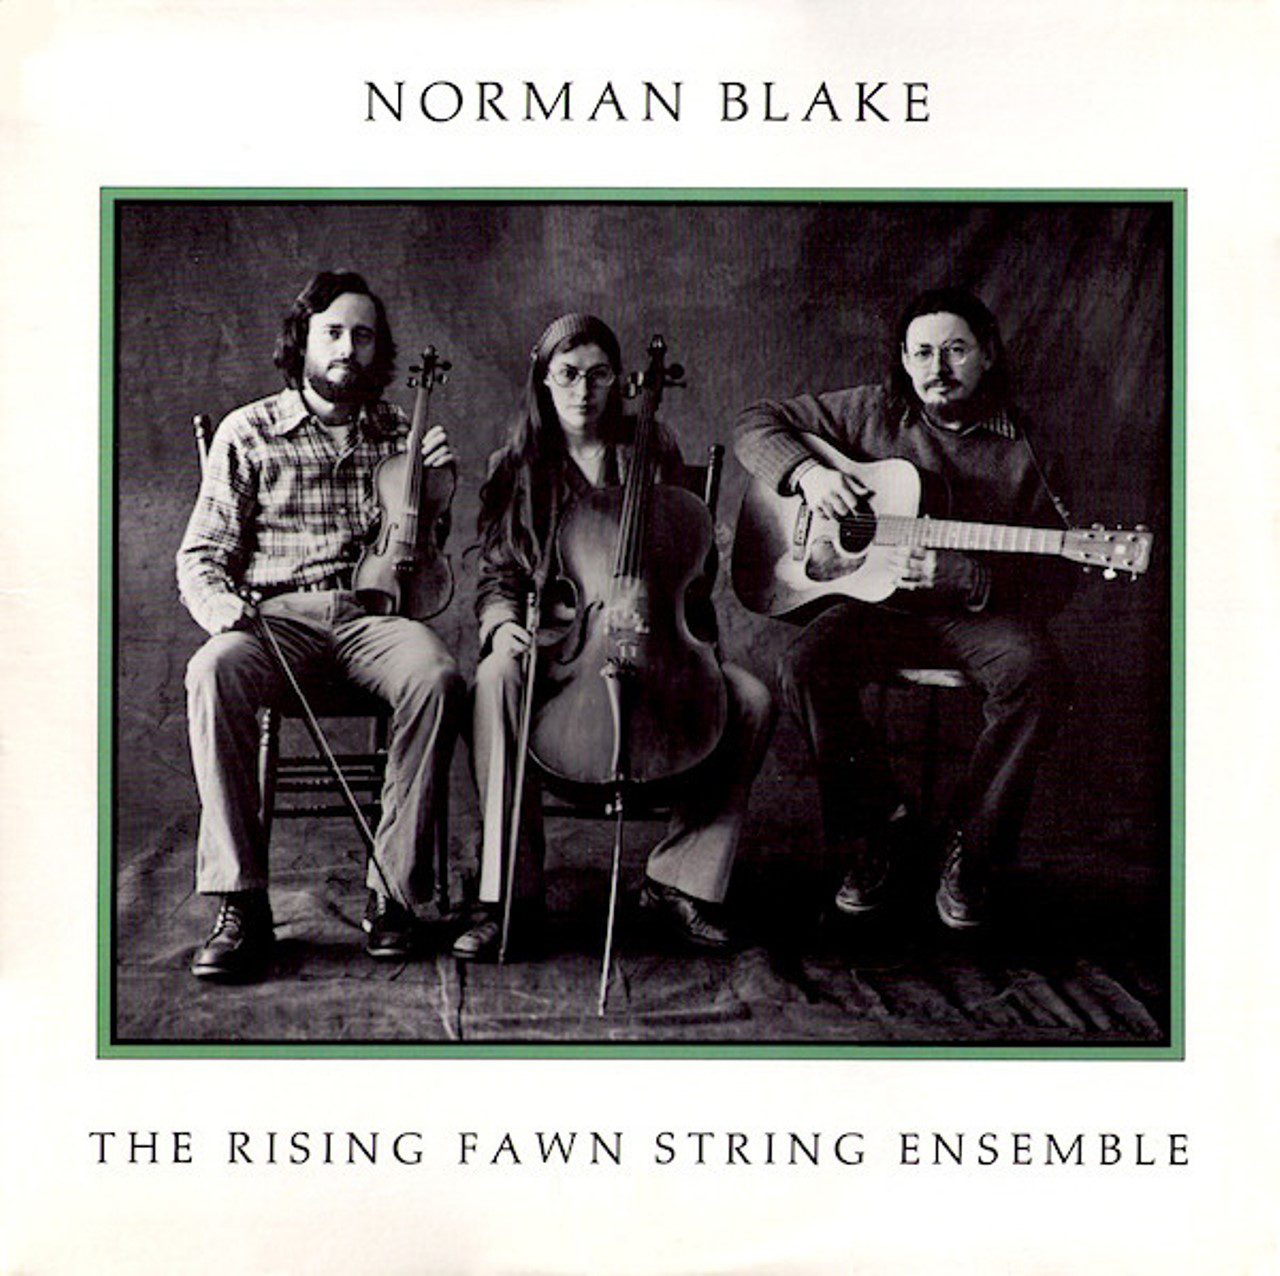 Norman Blake – The Rising Fawn String Ensemble cover album